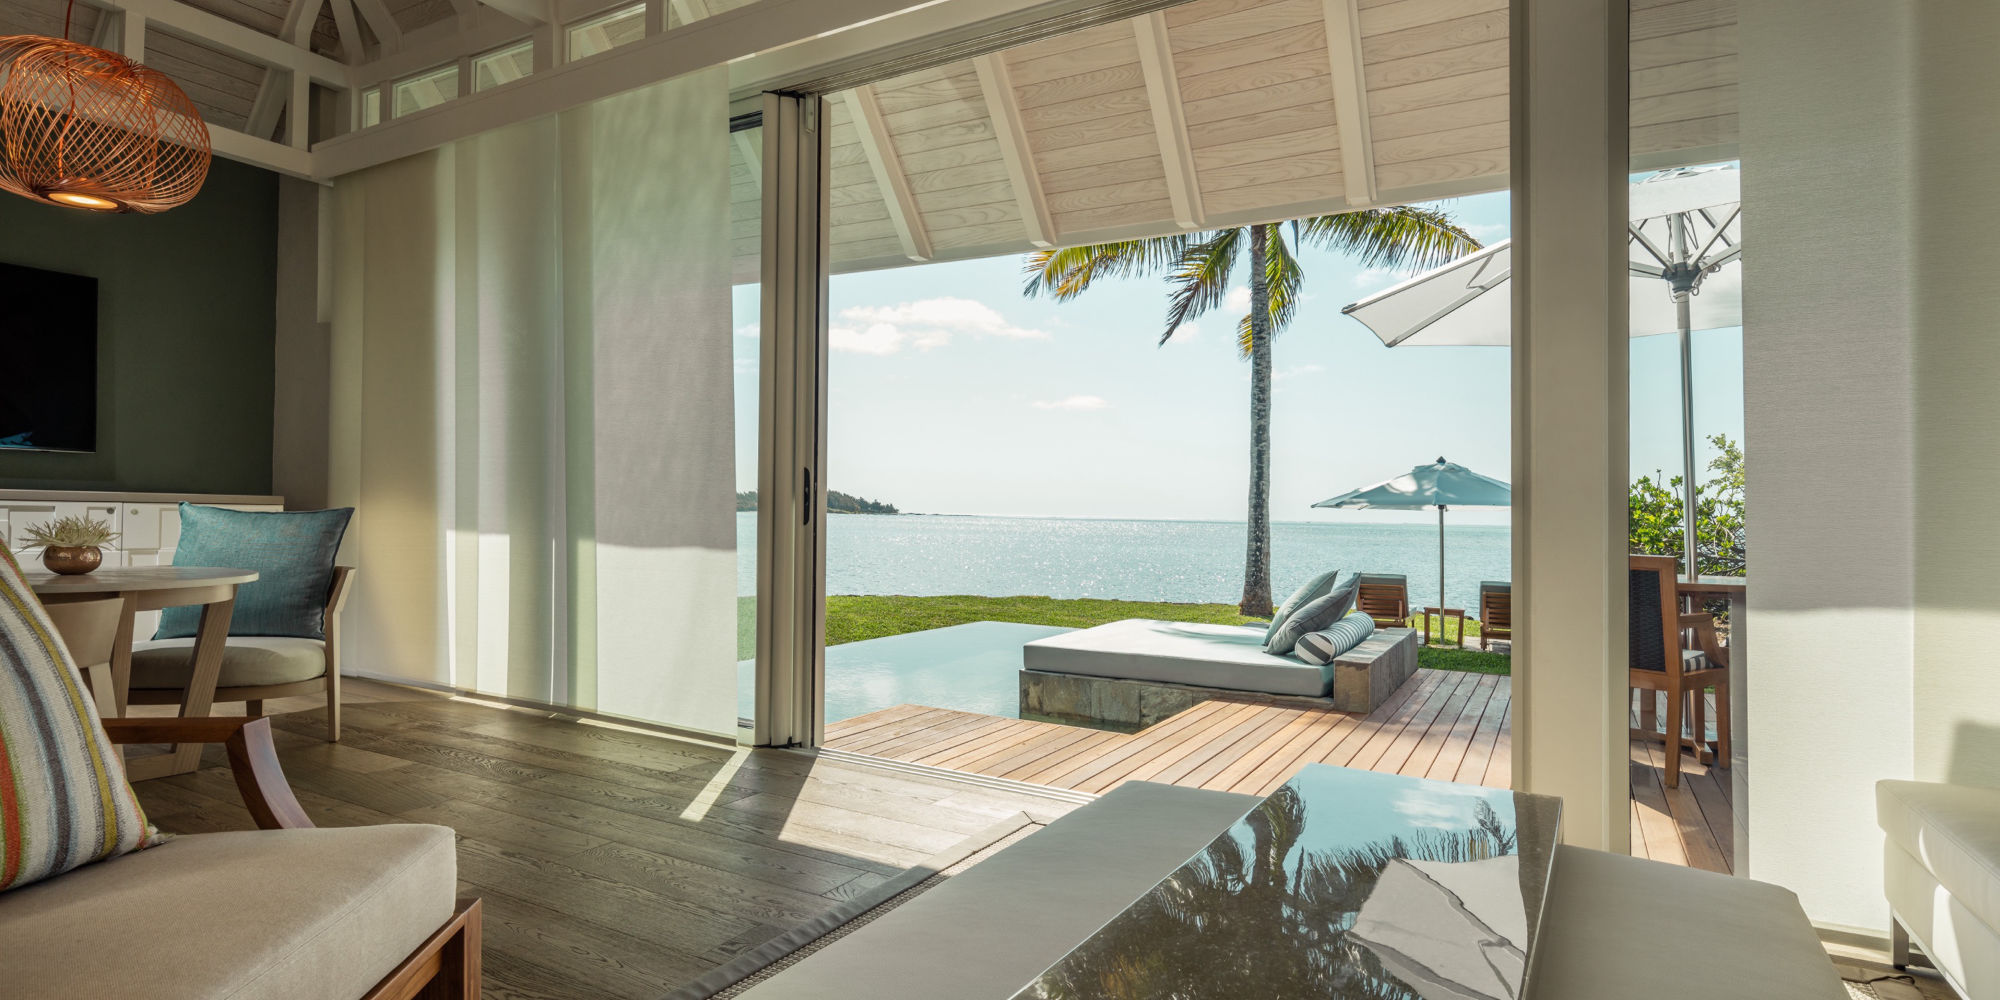 beach interior design four season 5 star hotel mauritius island